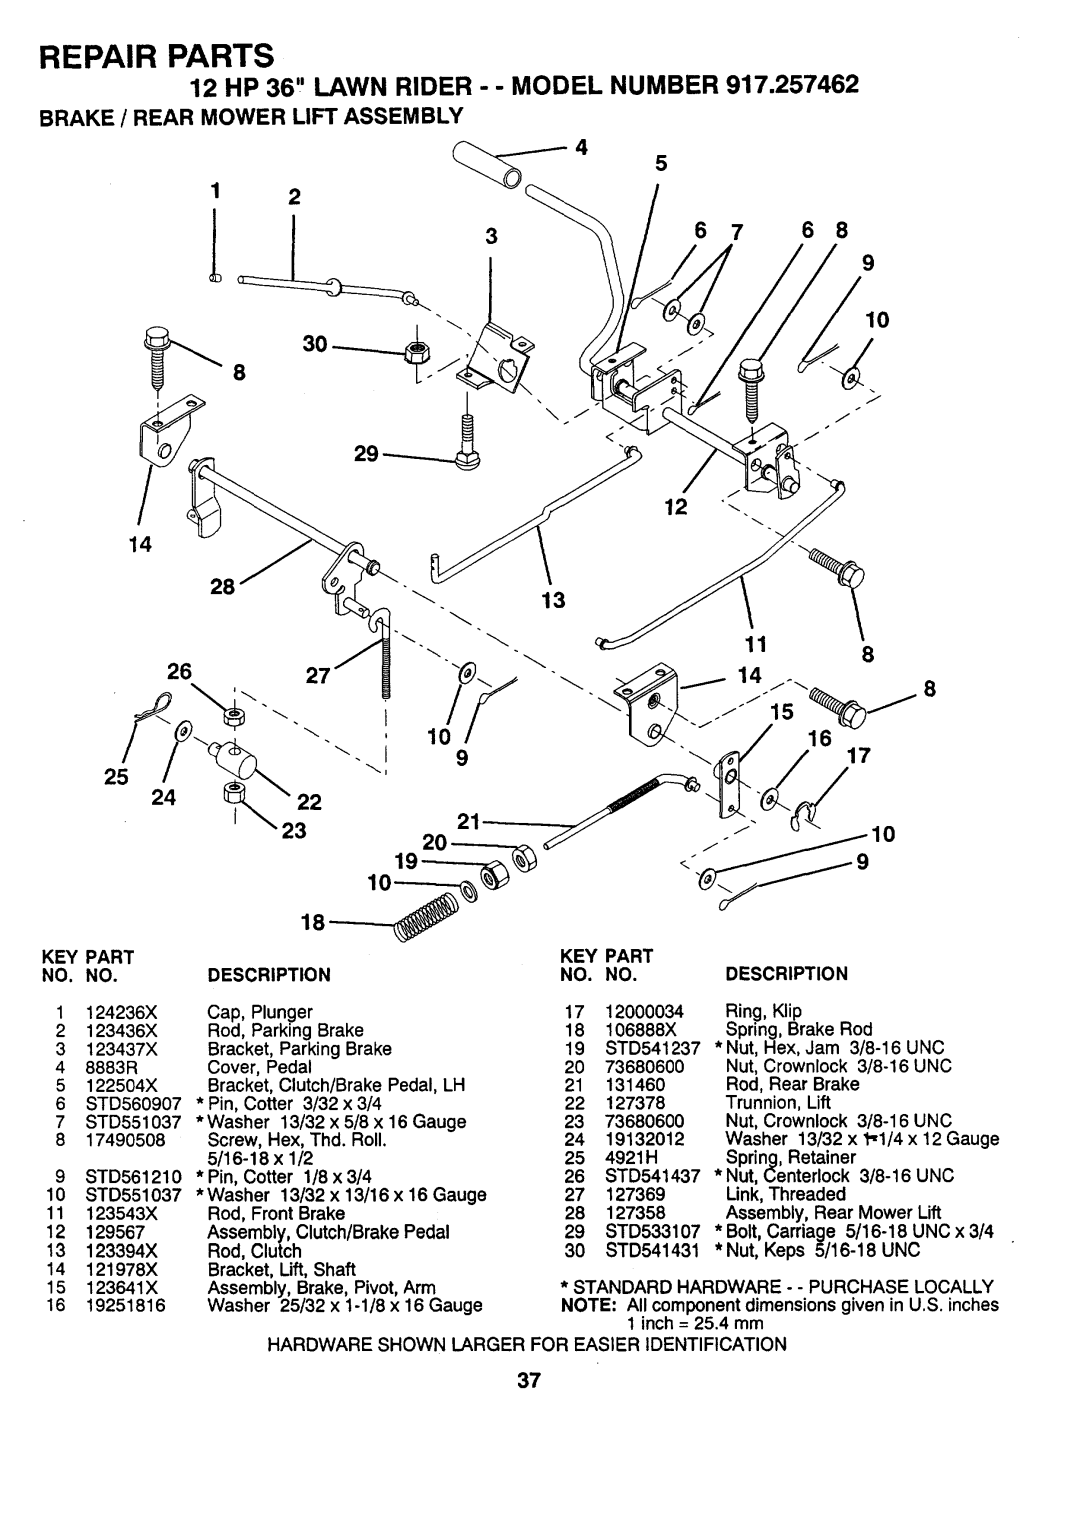 Sears 917.257462 Brake / Rear Mower Lift Assembly, 10 8, Repair Parts, 12 HP 36 LAWN RIDER - - MODEL NUMBER, > Key No 